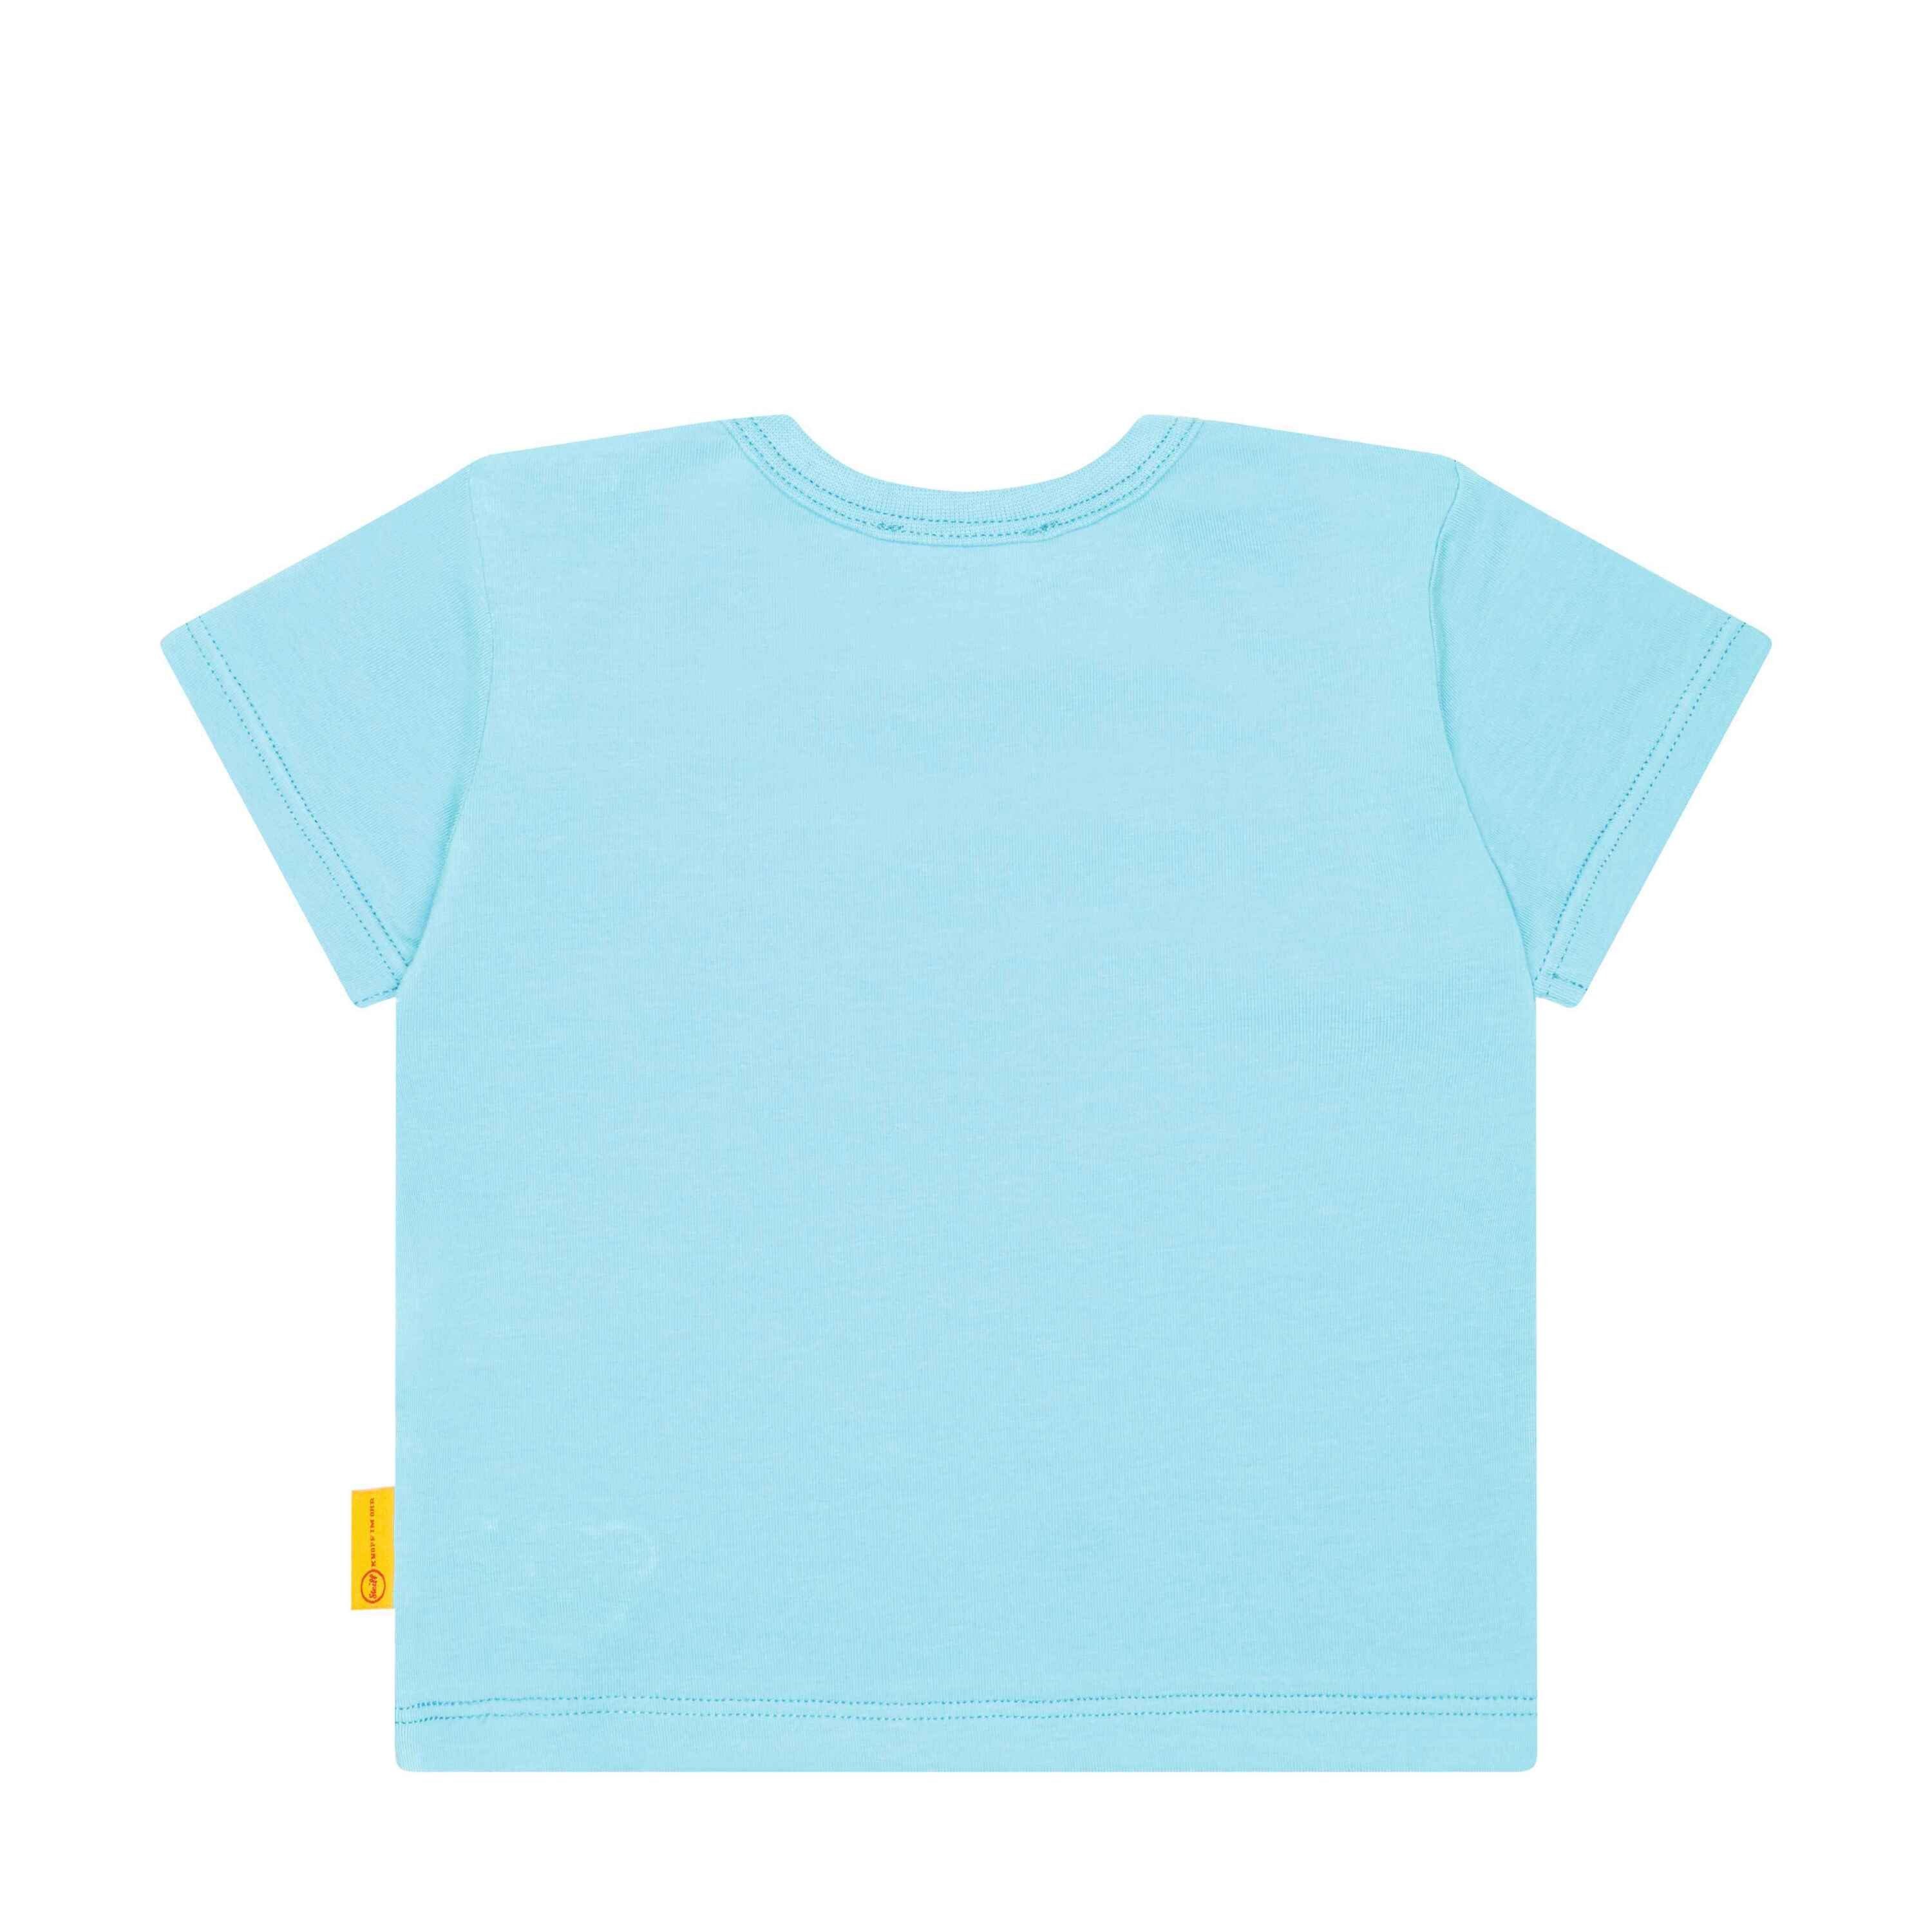 Topaz Steiff Blue T-Shirt kurzarm Happy T-Shirt Hippo